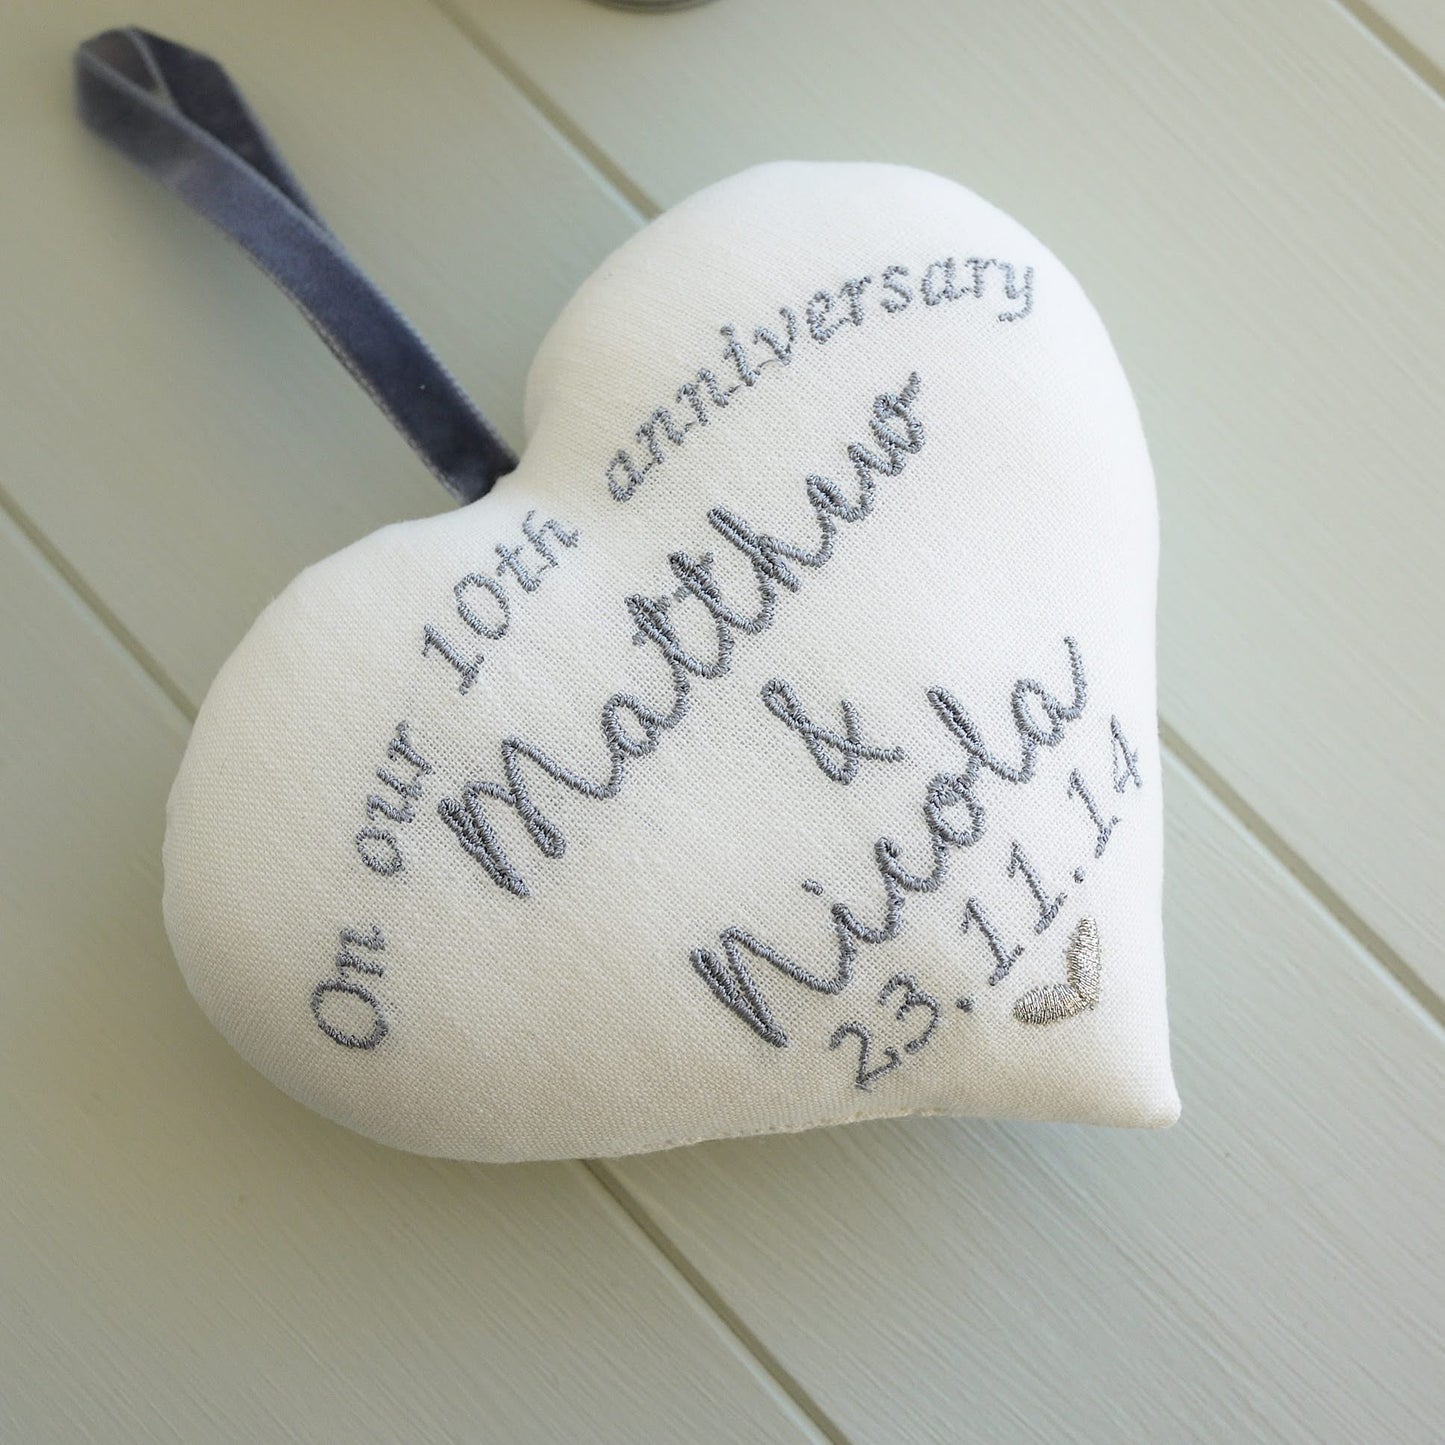 Personalised 10th Wedding Anniversary Embroidered Heart Set 10th Wedding Anniversary Gifts